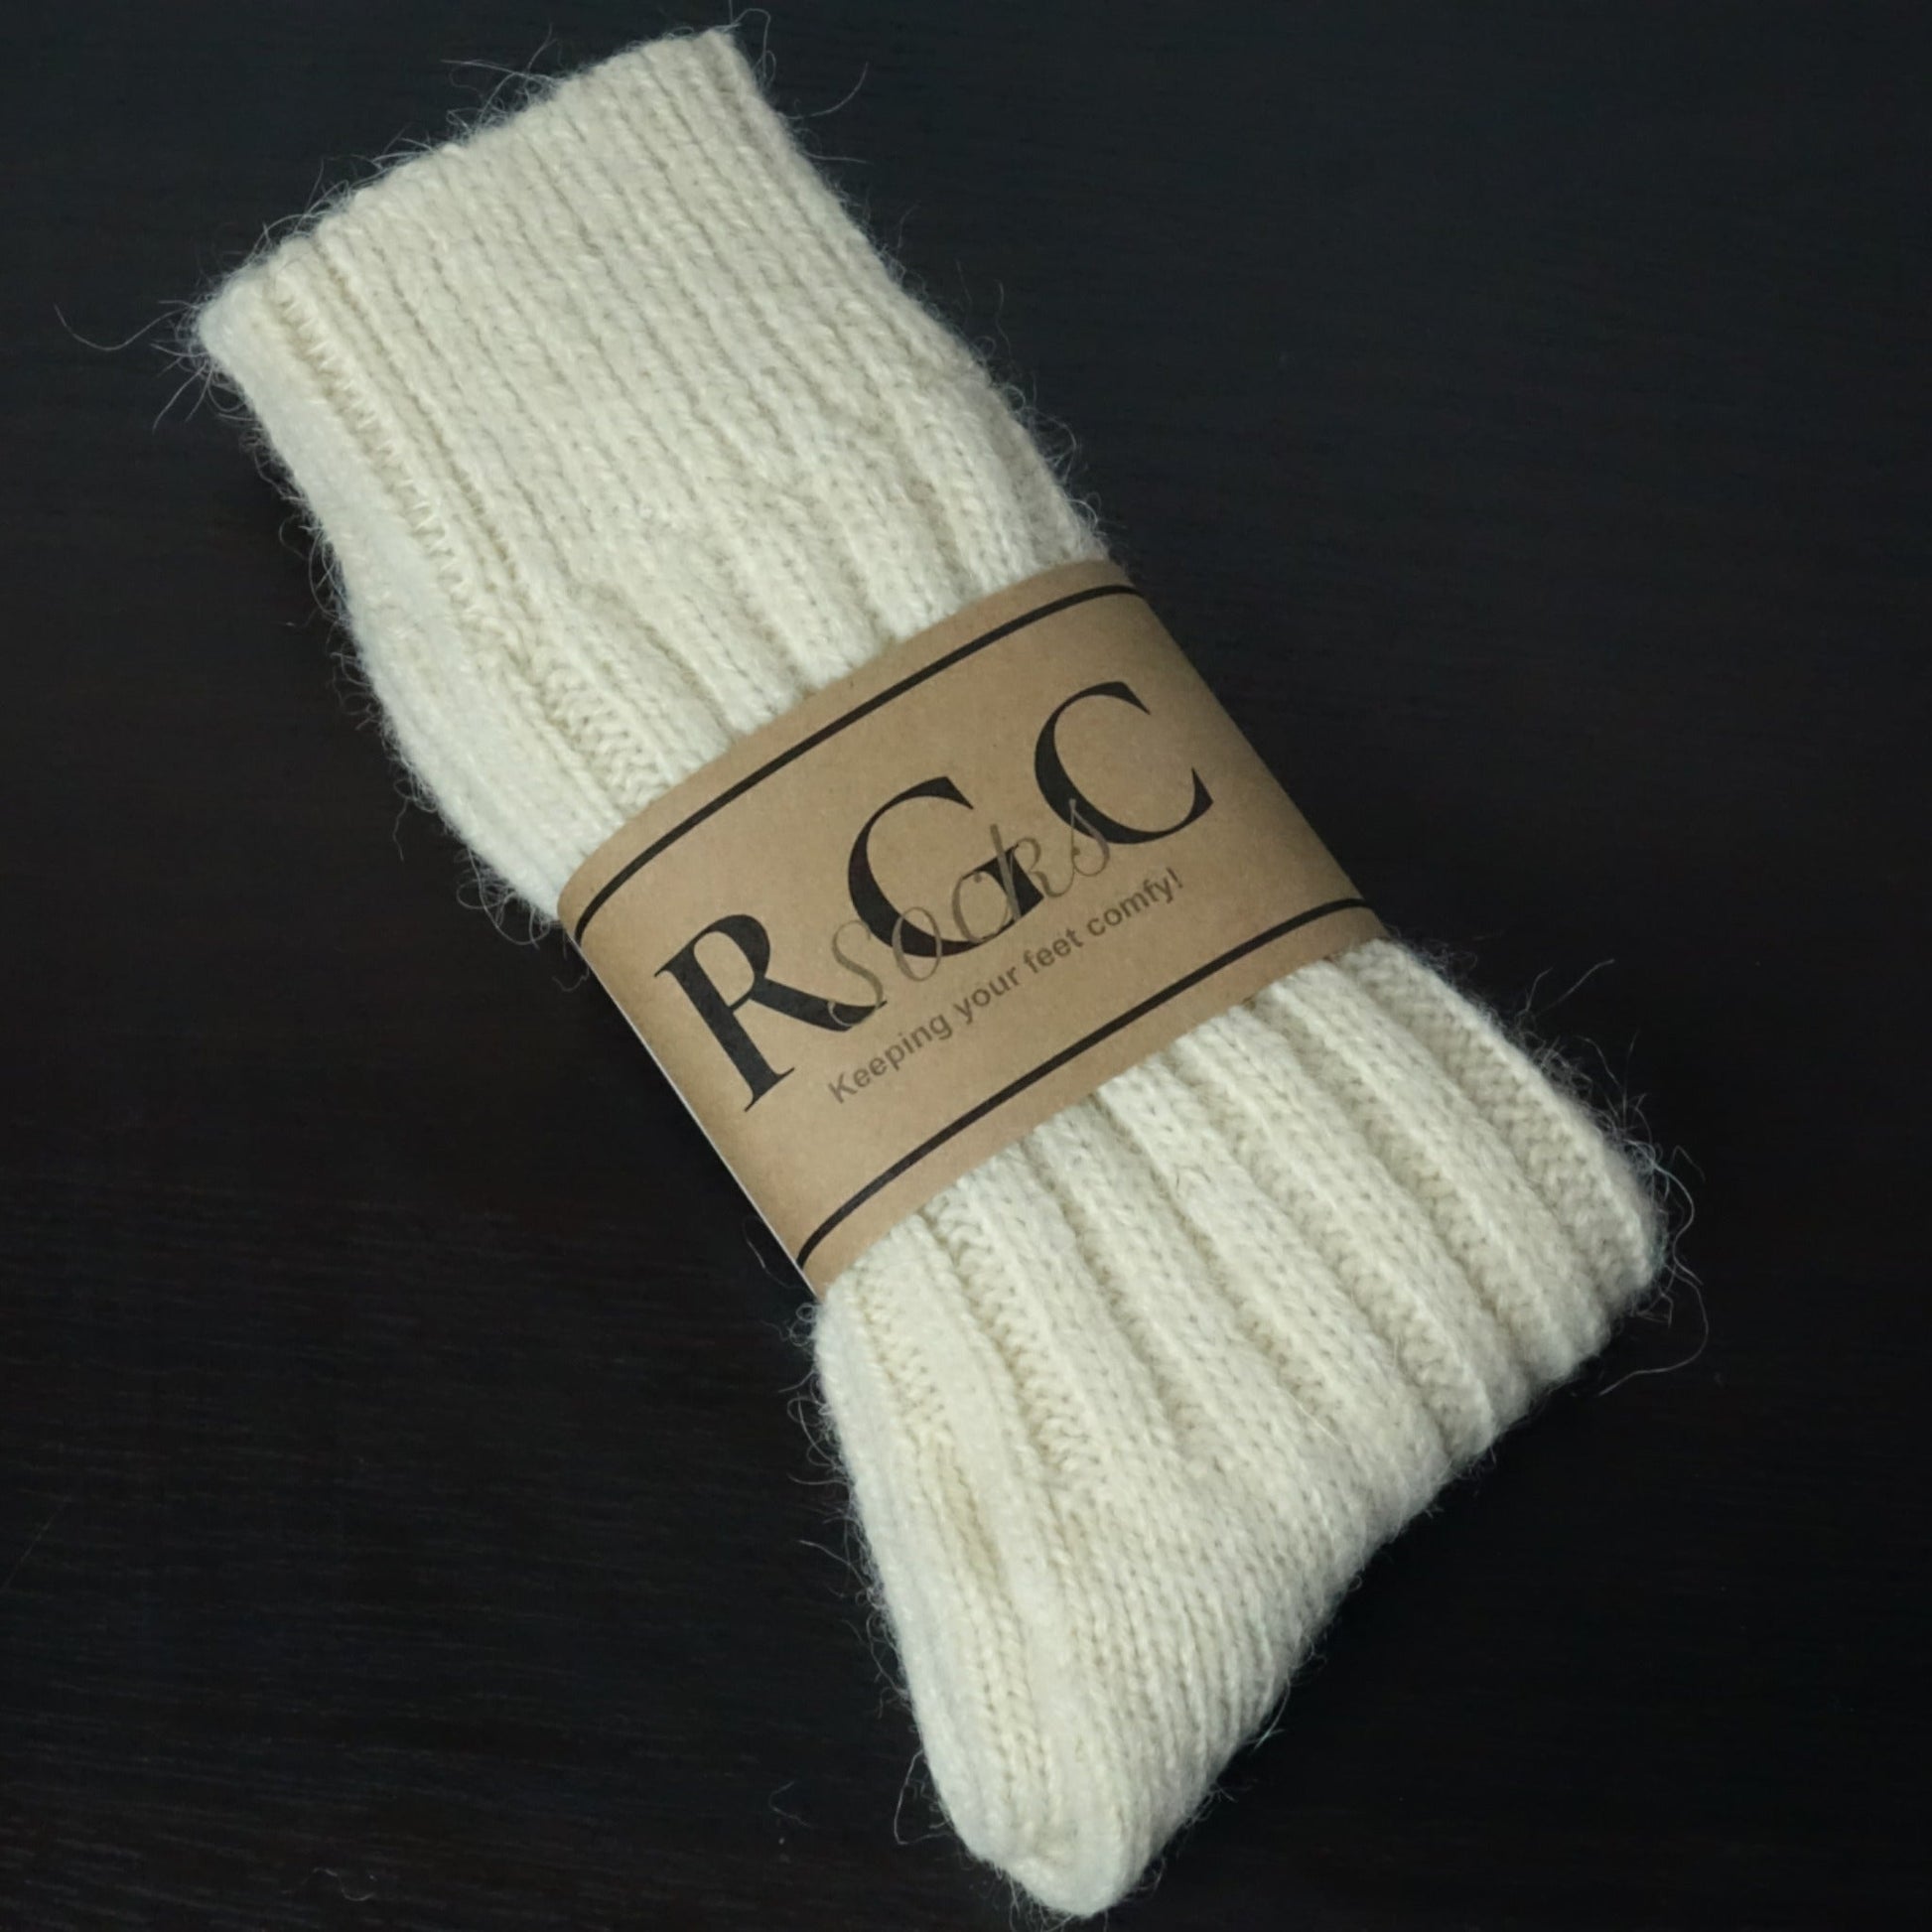 rgc socks bythemountain socks alpaca off white wool socks